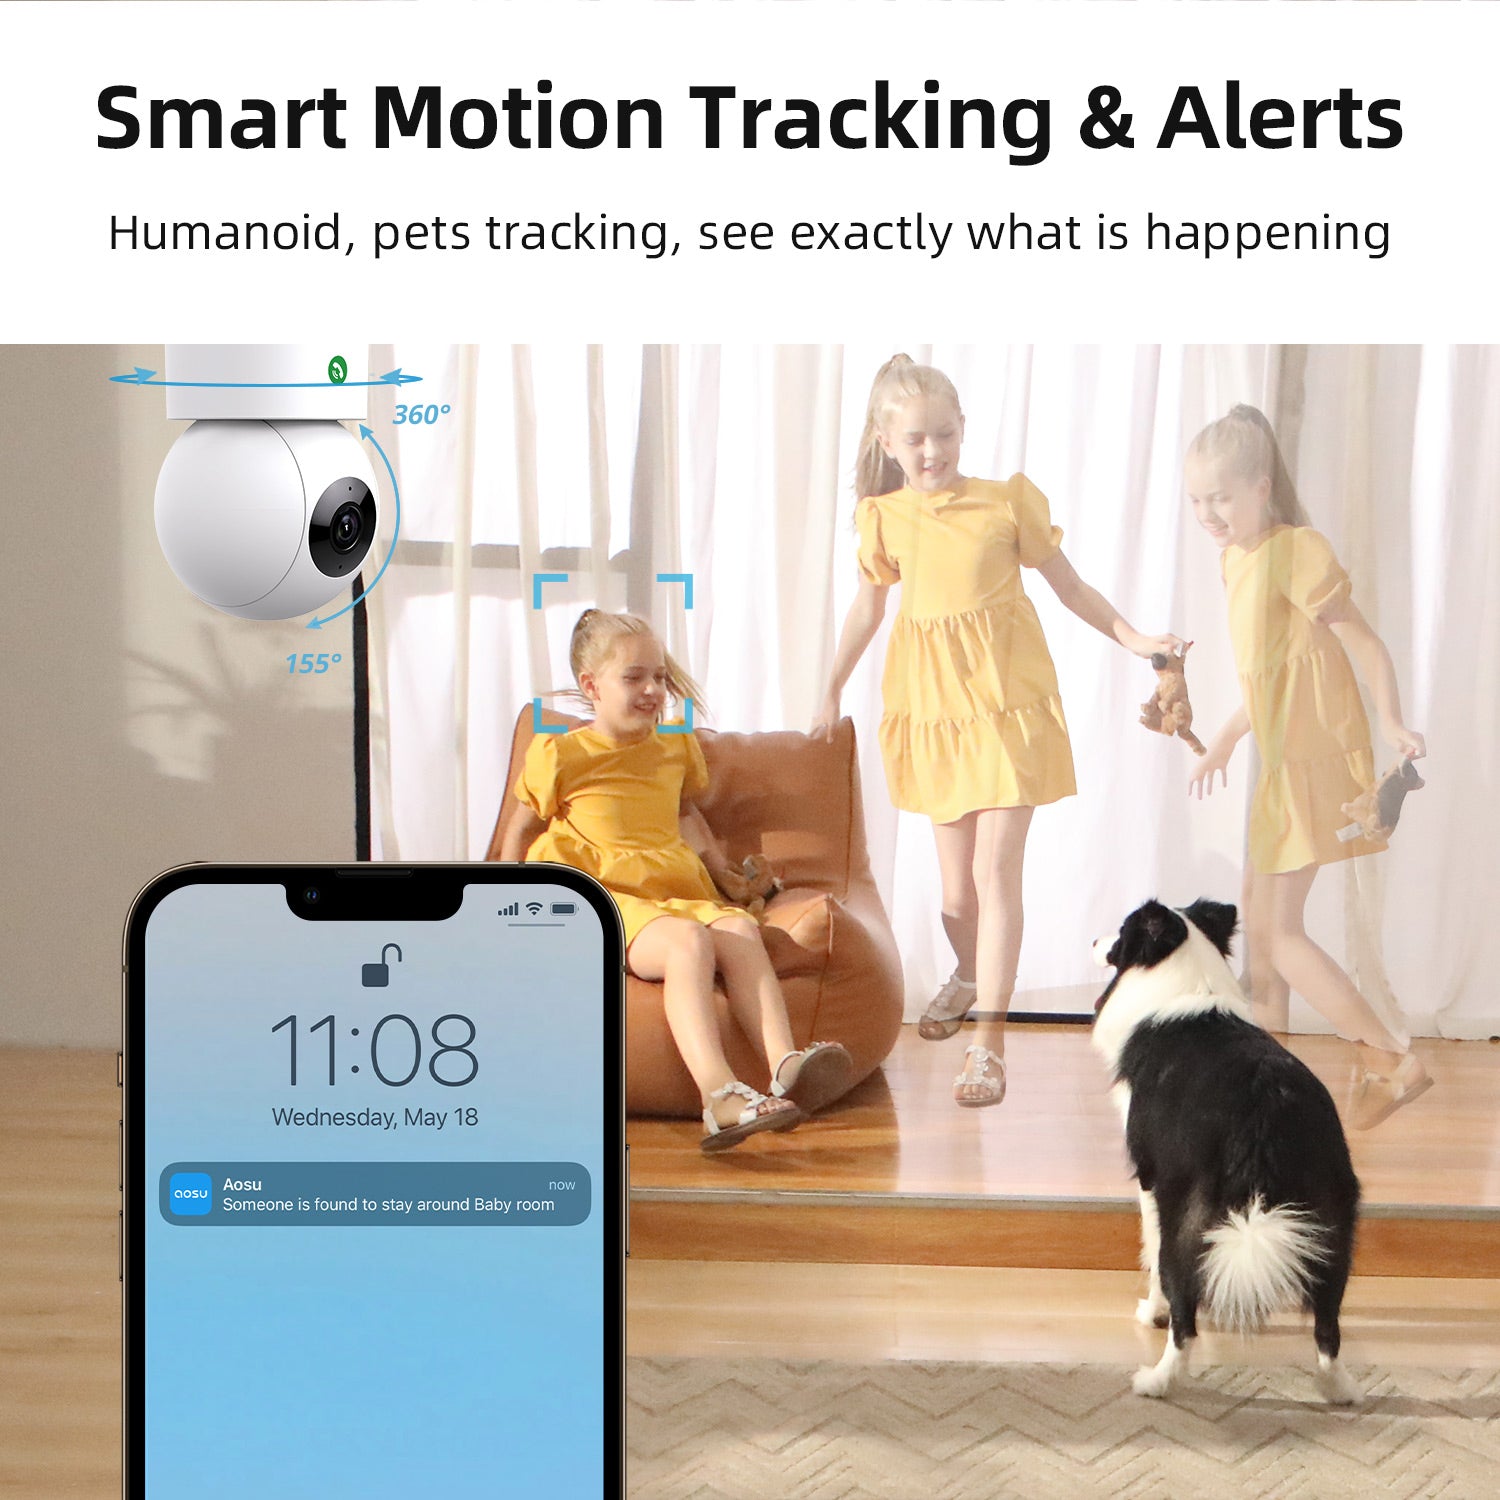 Smart Motion Tracking & Alerts